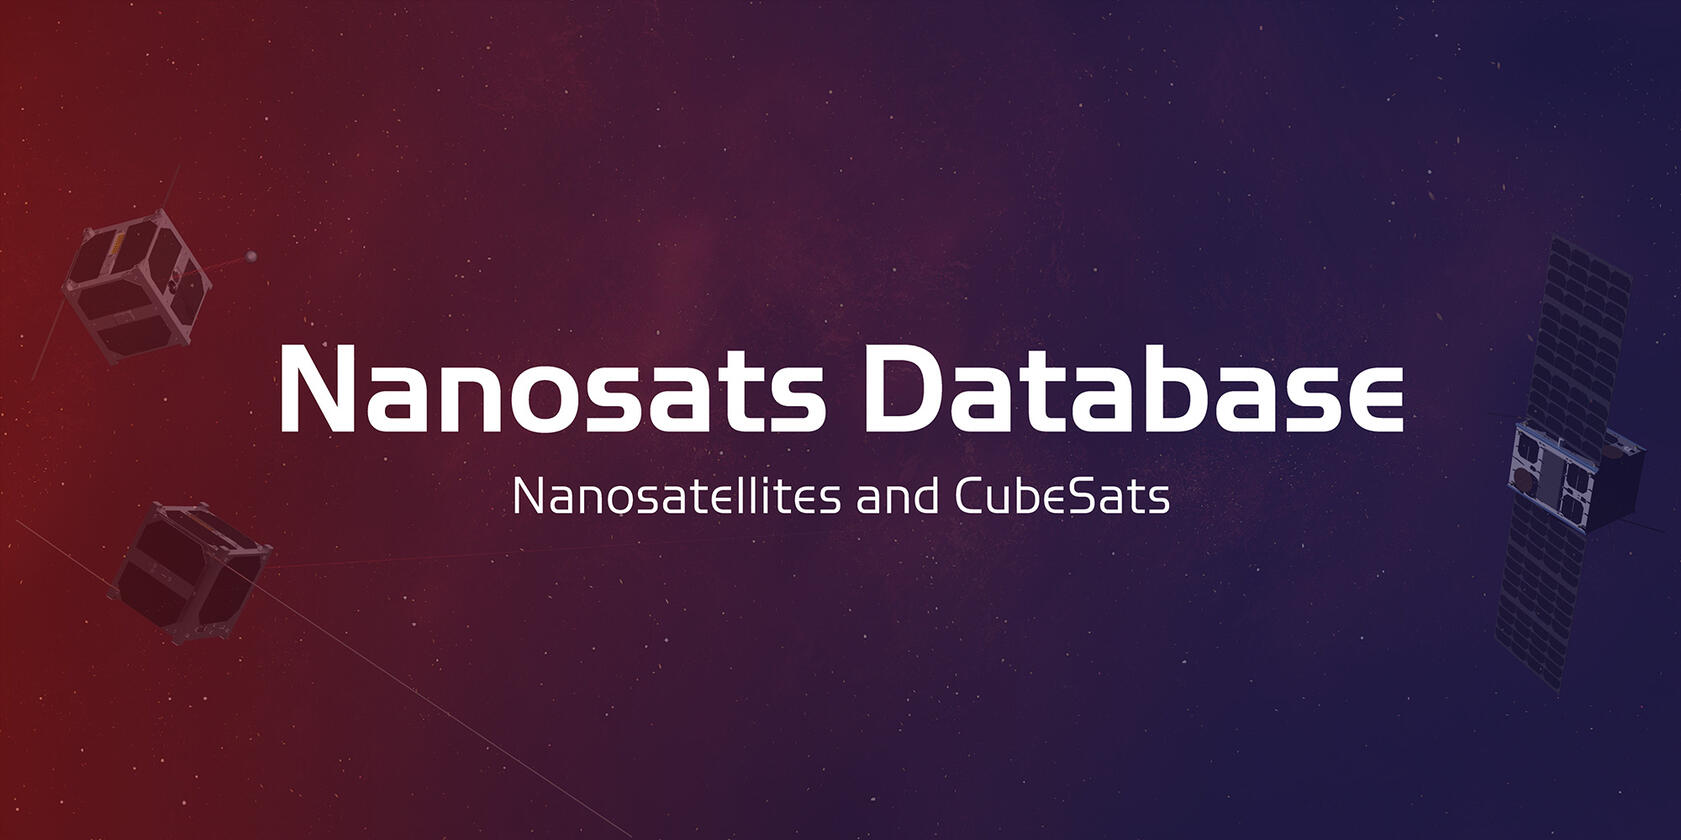 Database of nanosatellites and CubeSats created and curated by Erik Kulu